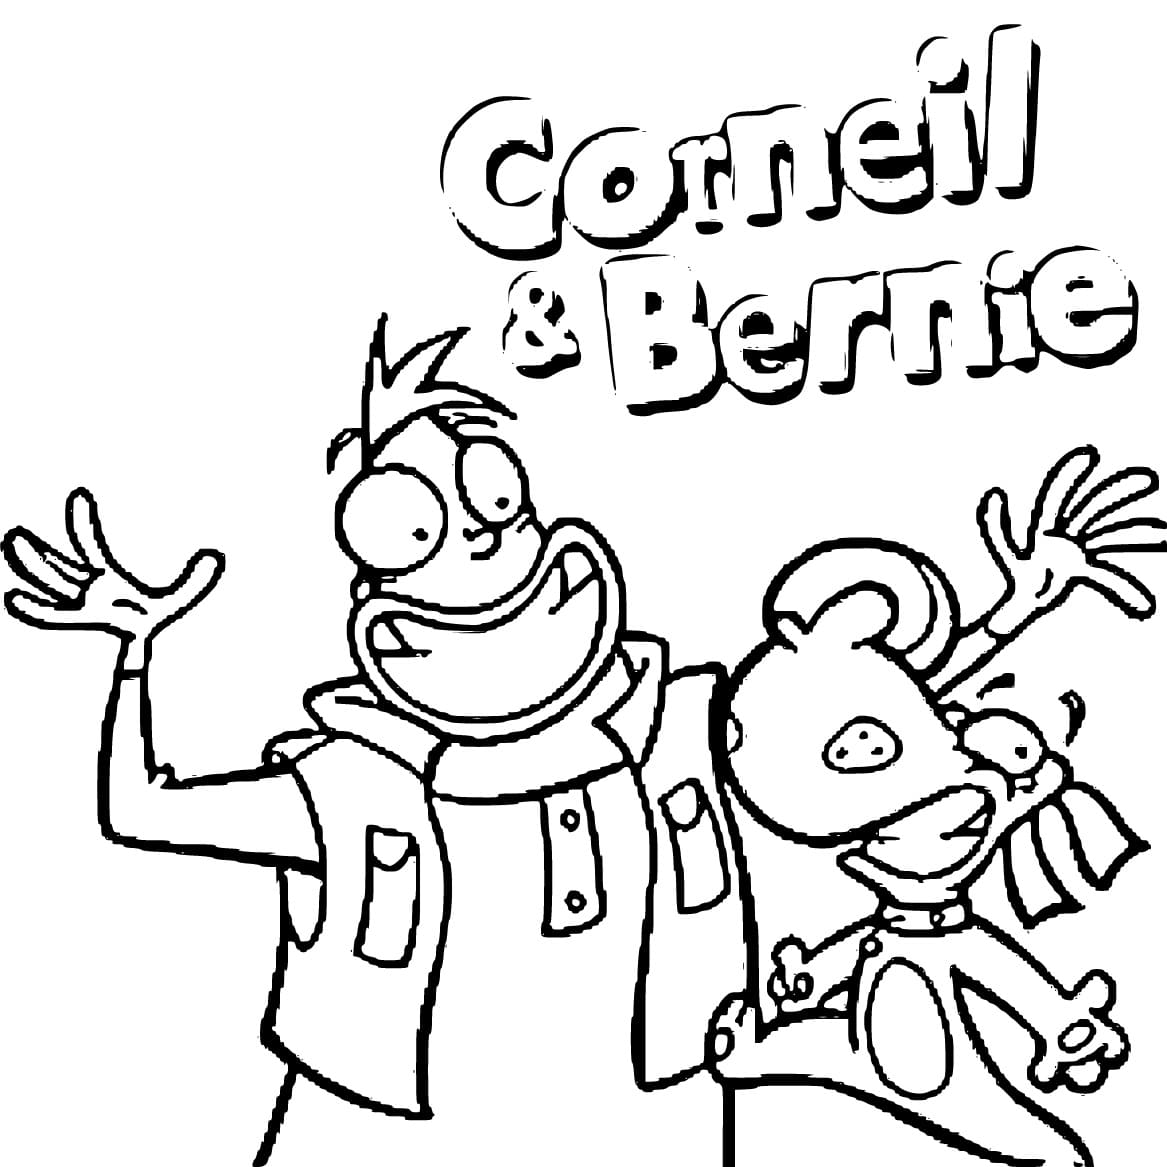 Coloriage Dessin Gratuit de Corneil et Bernie